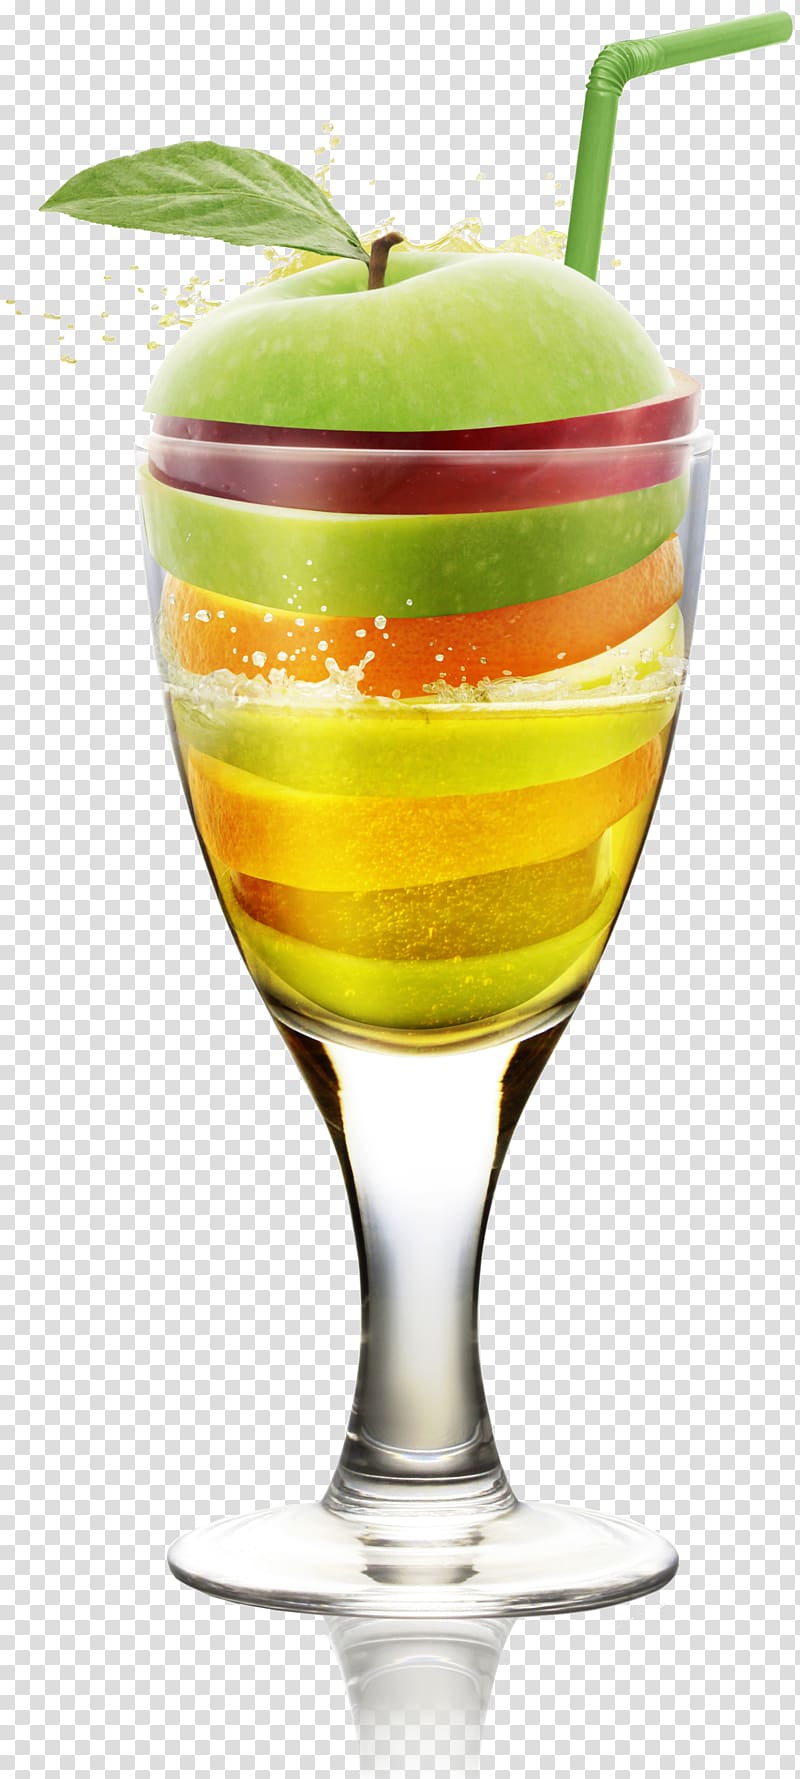 Orange juice Cocktail Smoothie Vegetable juice, juice transparent background PNG clipart